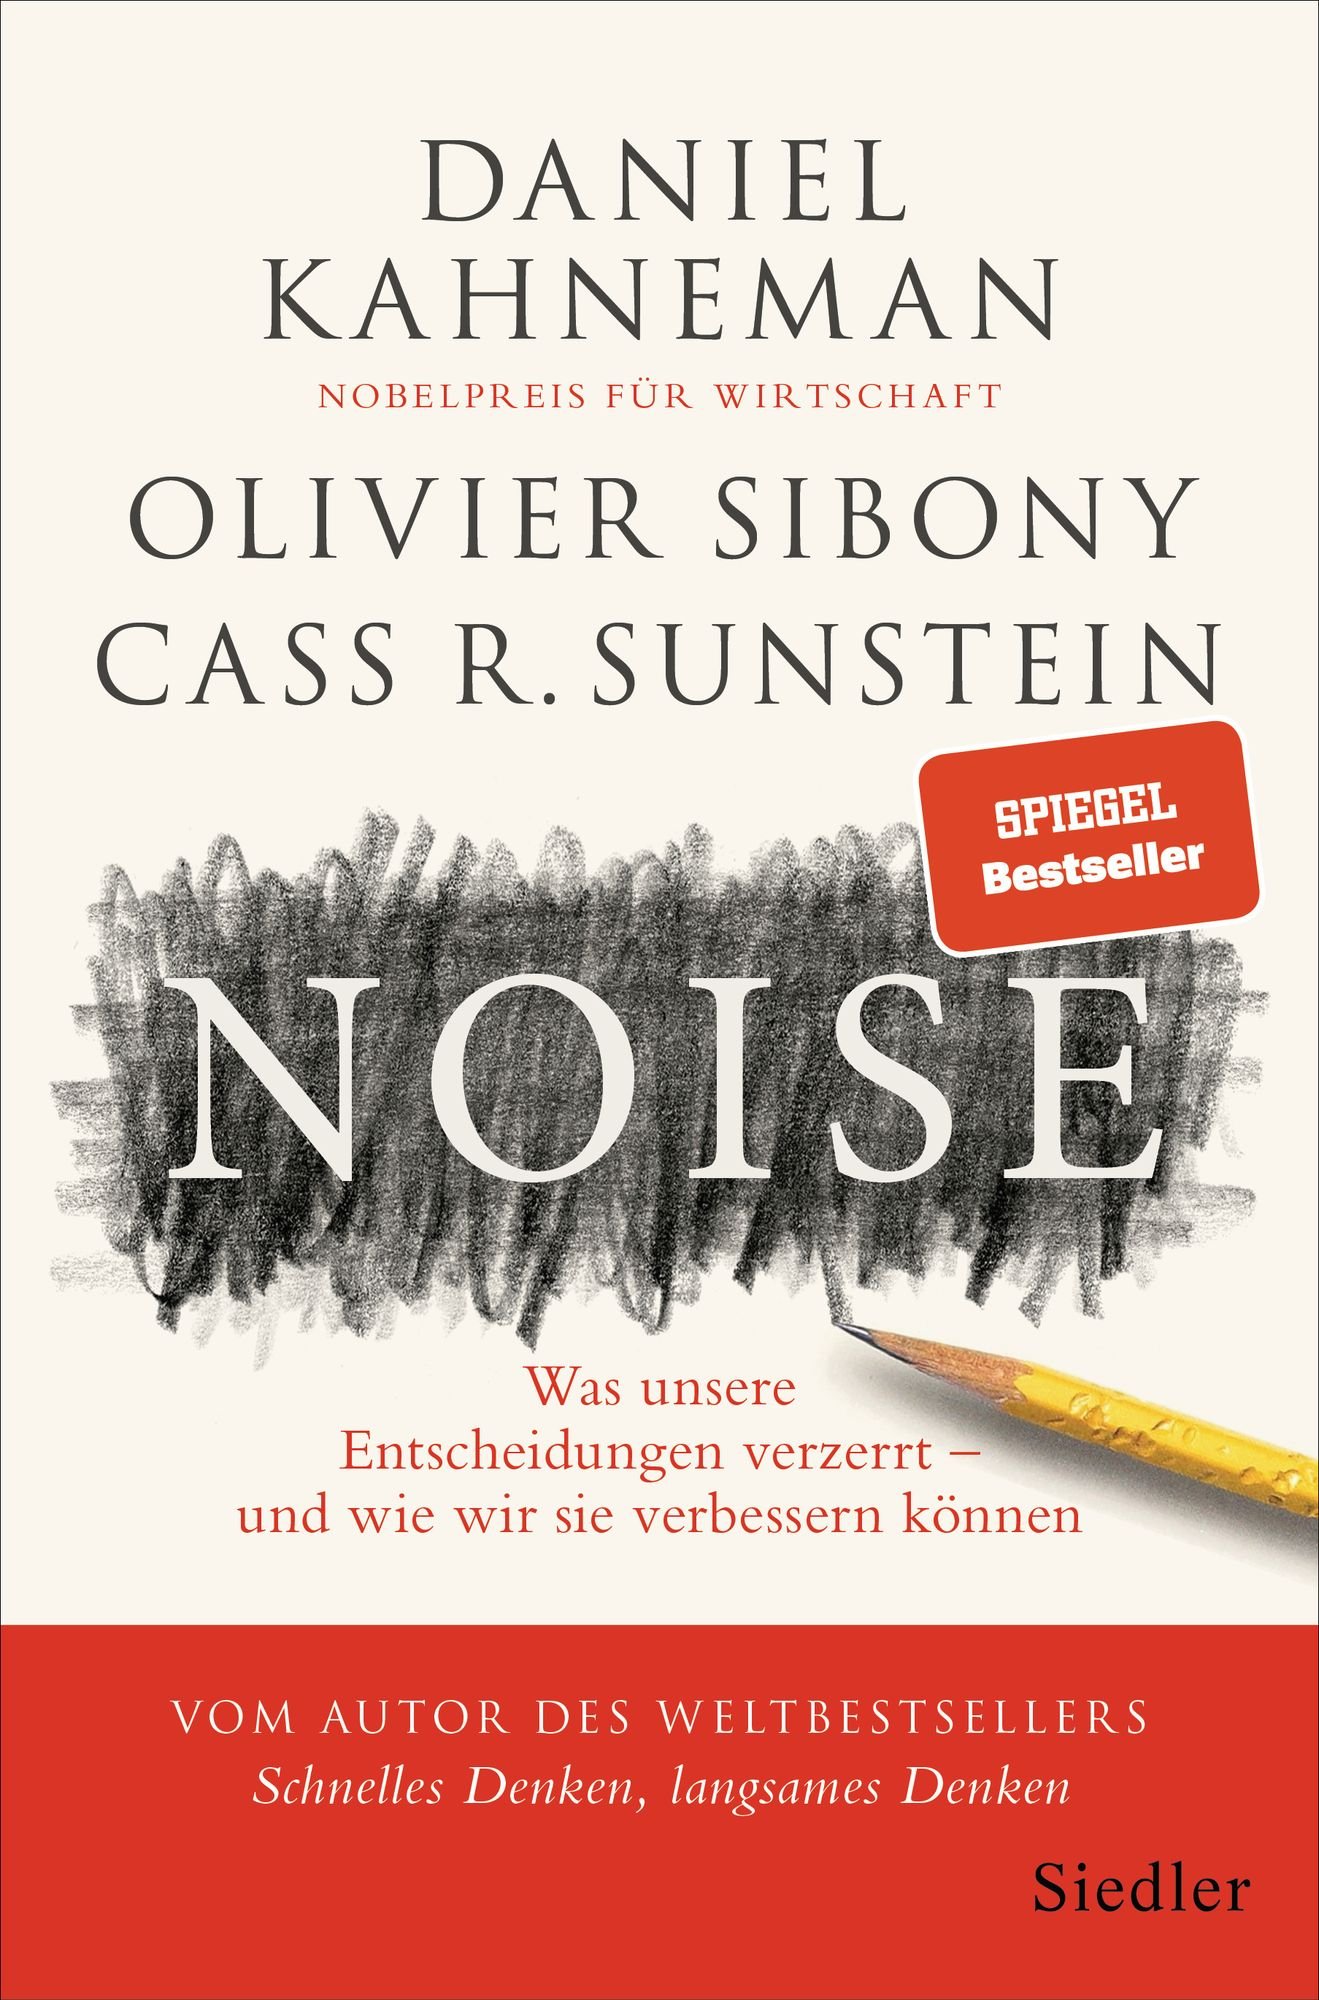 Daniel Kahneman, Olivier Sibony, Cass Sunstein: Noise (Paperback, German language, Siedler)